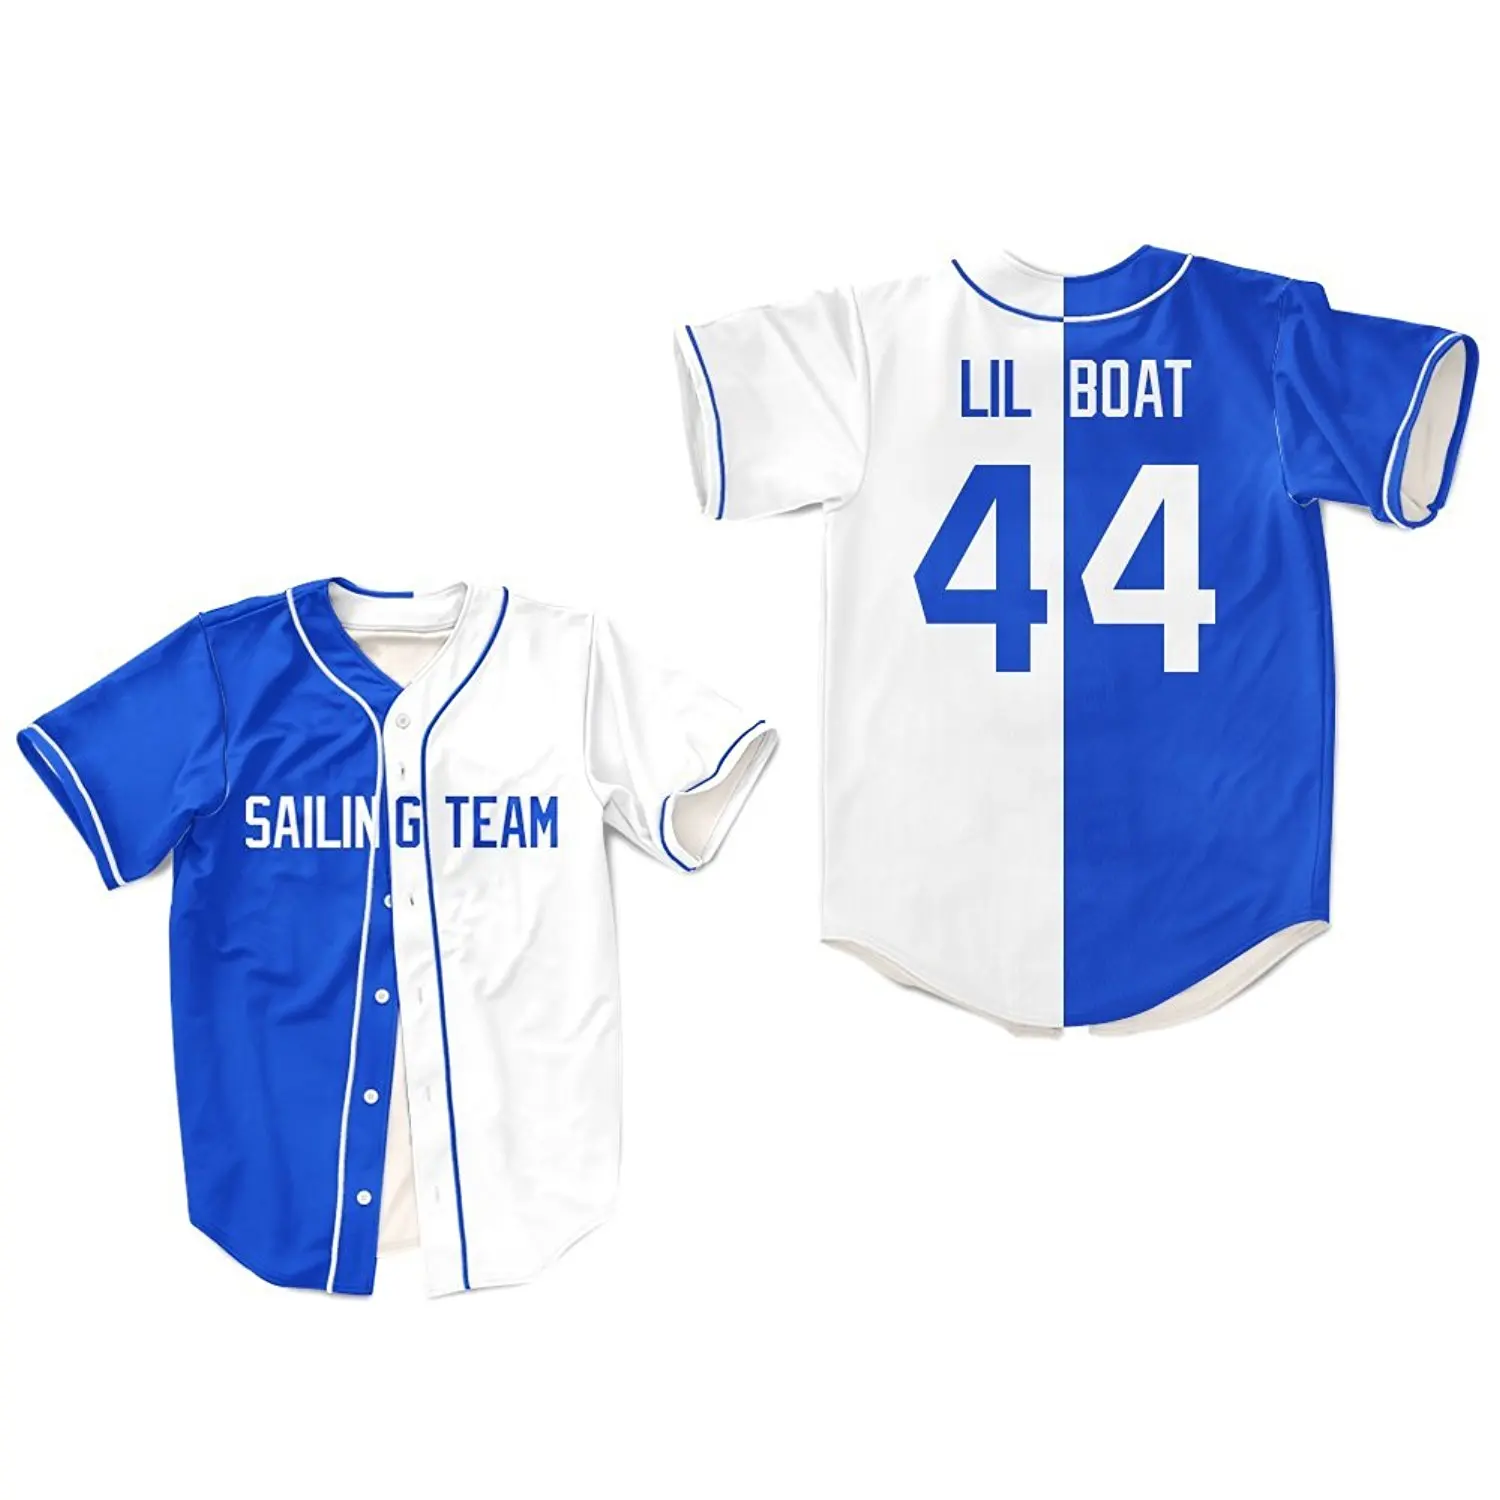 royal blue and white baseball jersey